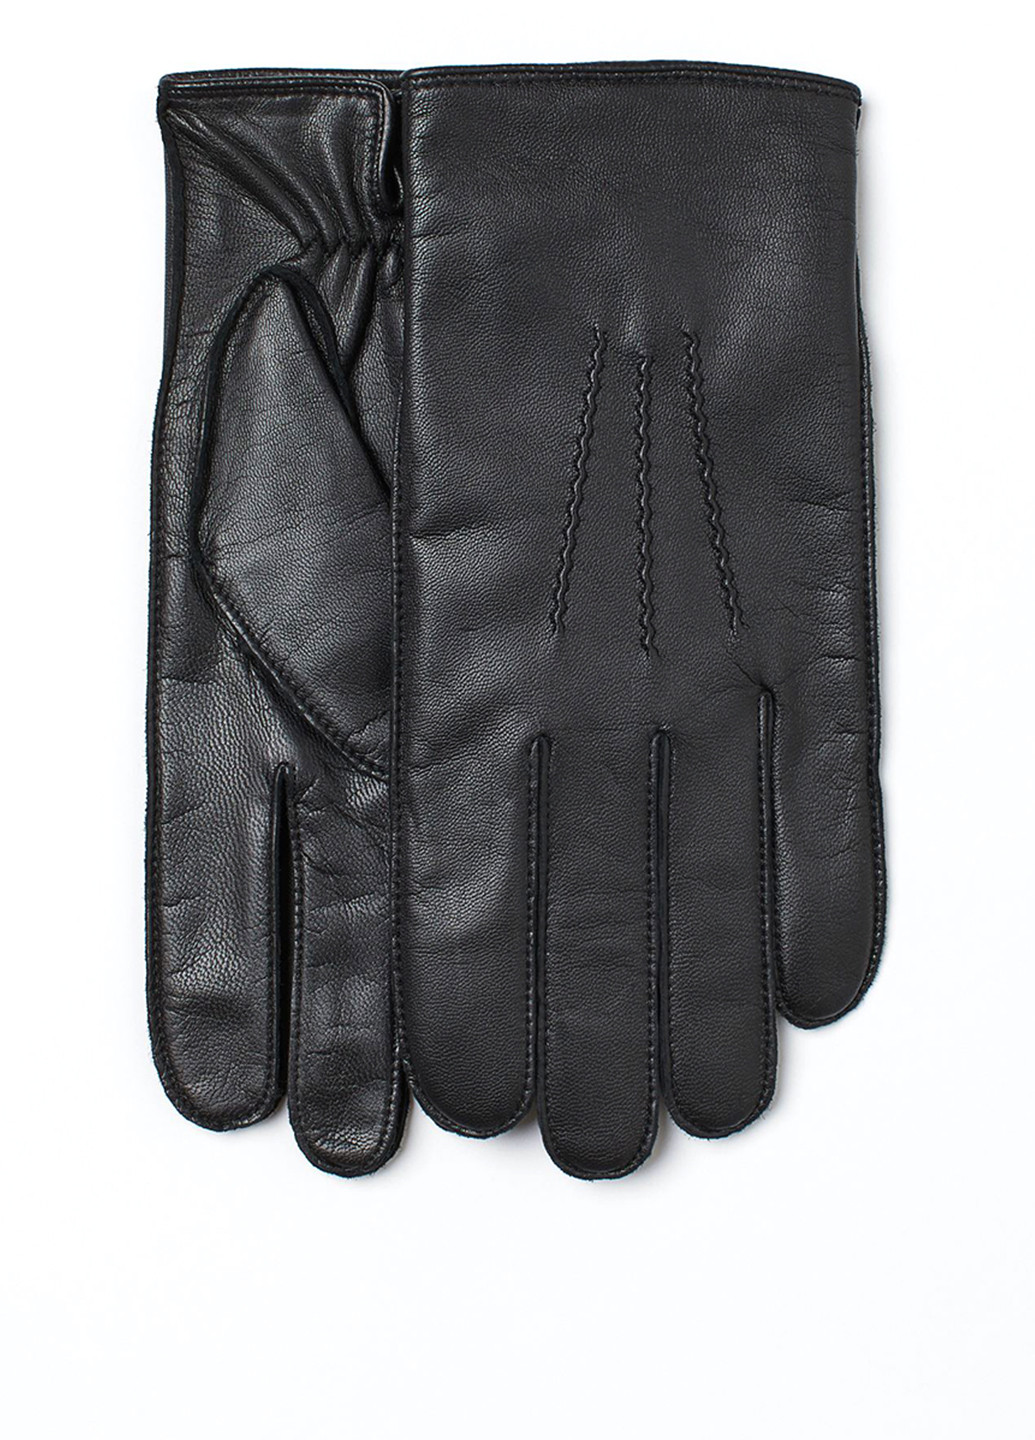 Перчатки H&M однотонные чёрные кэжуалы натуральная кожа